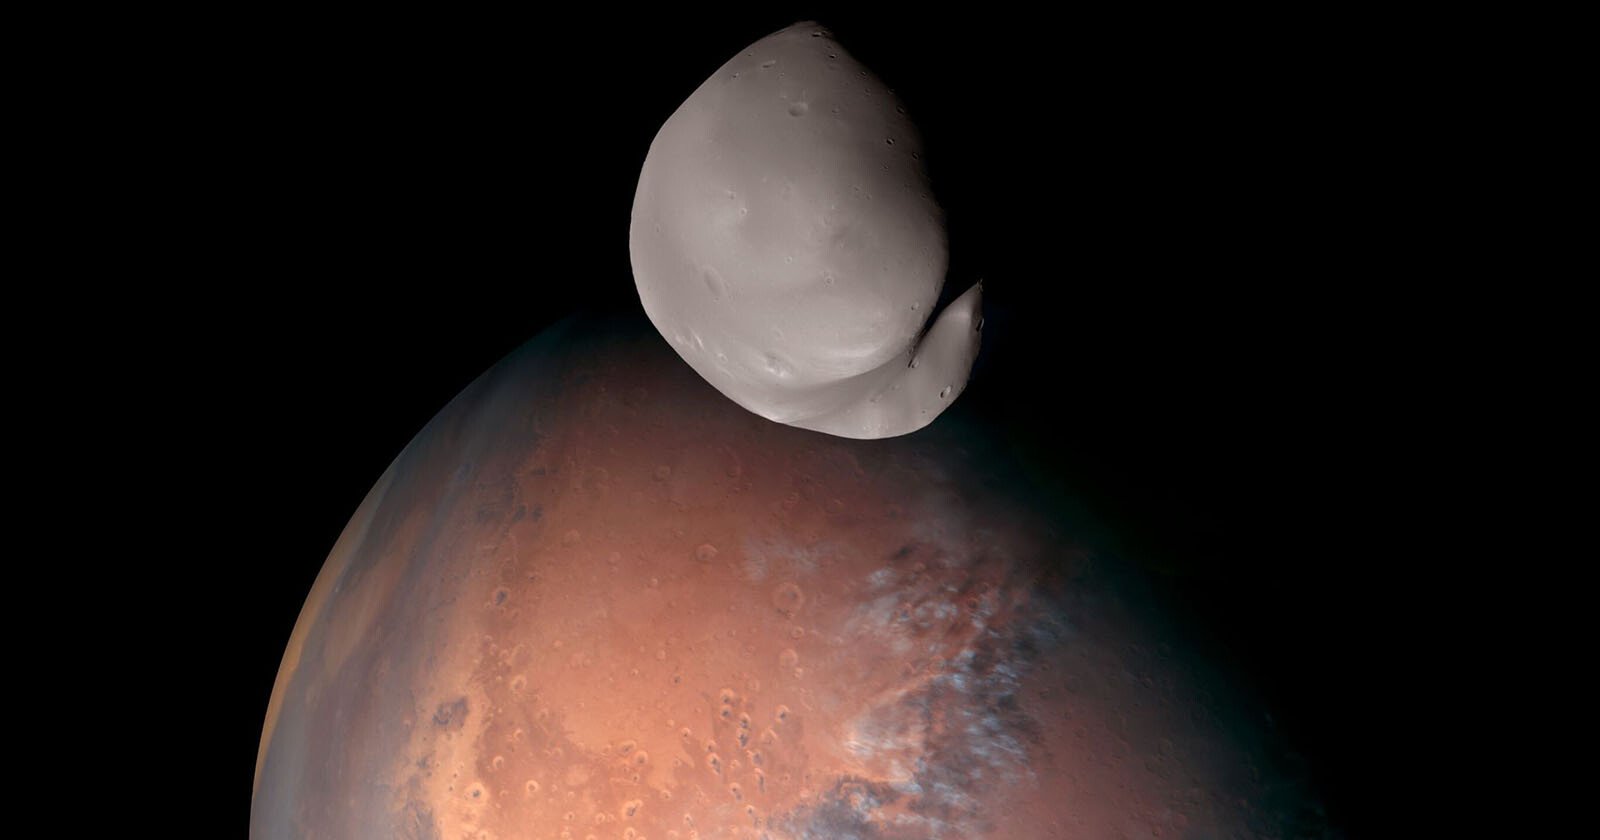  space probe captures detailed mars moon deimos 